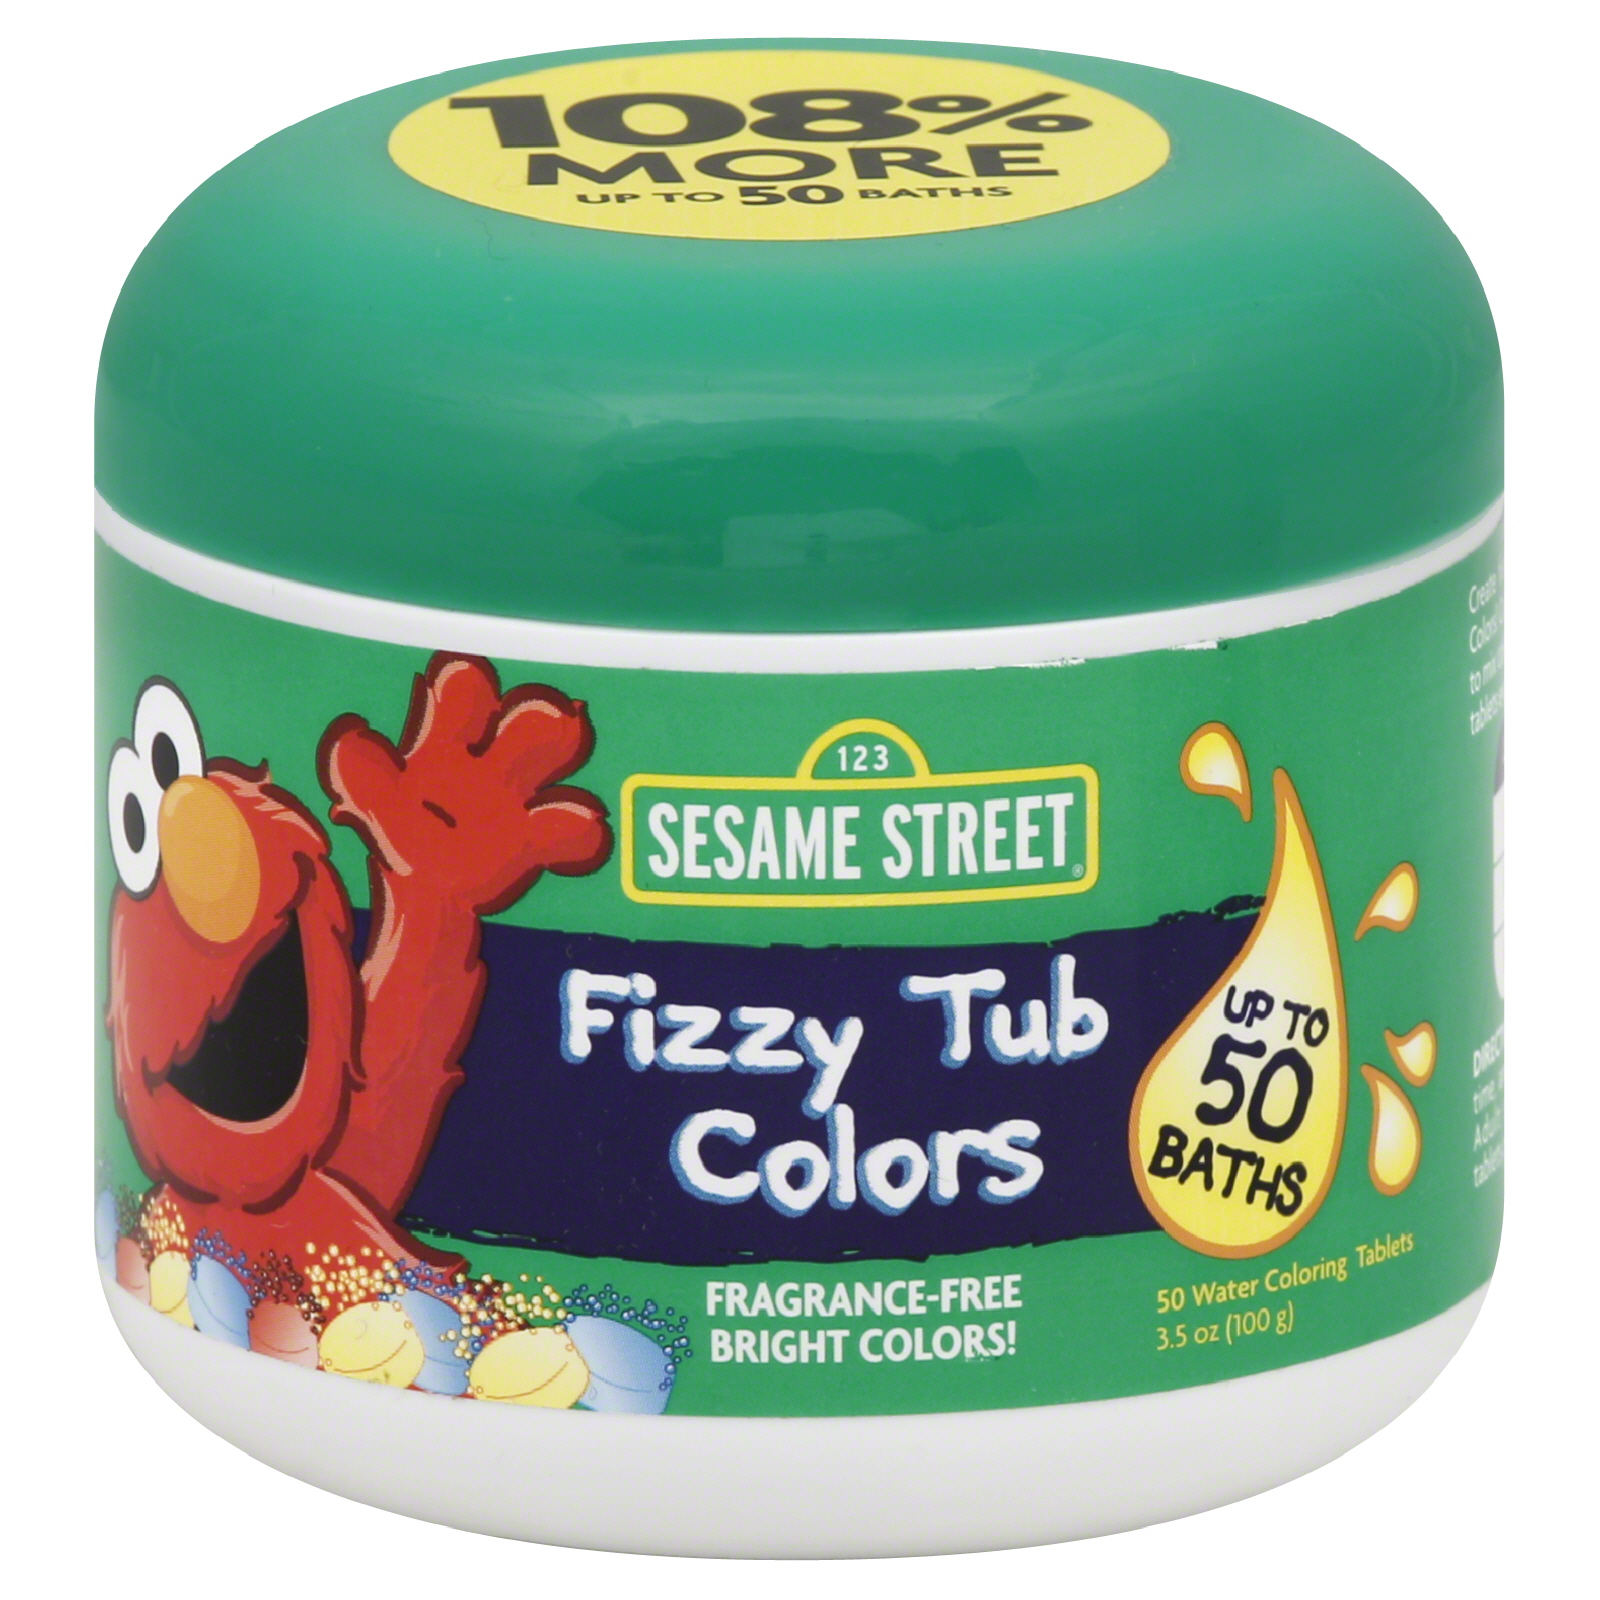 Sesame Street Fizzy Tub Colors, 24 Tablets, 2.5 oz (73 g)